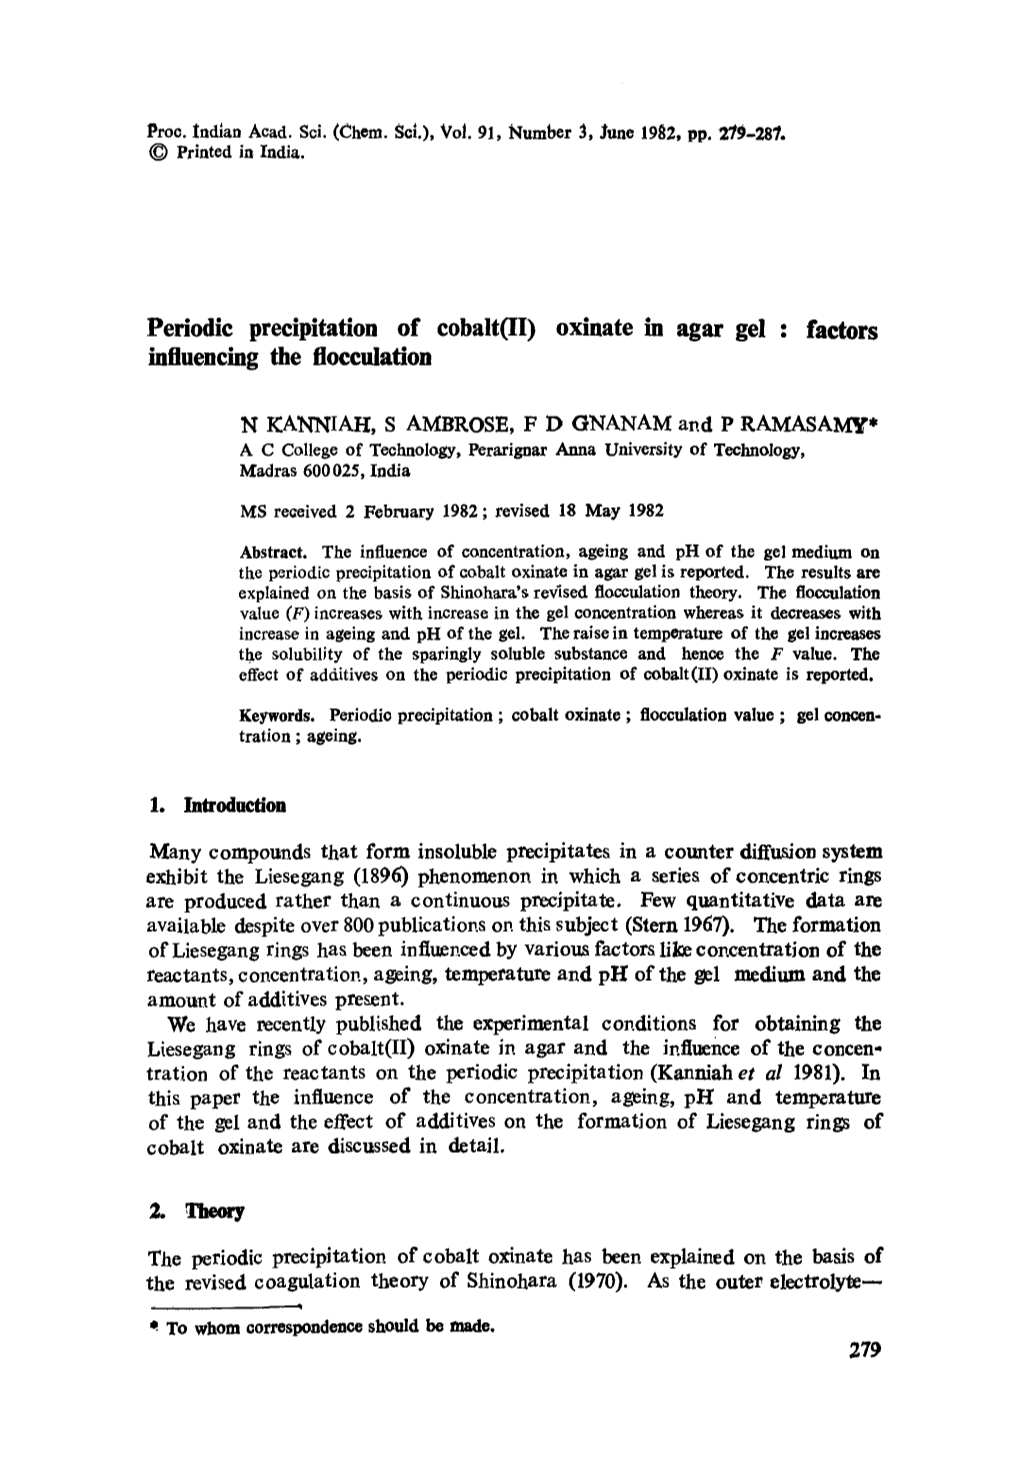 Periodic Precipitation of Cobalt(II) Oxinate in Agar Gel : Factors Influencing the Flocculation